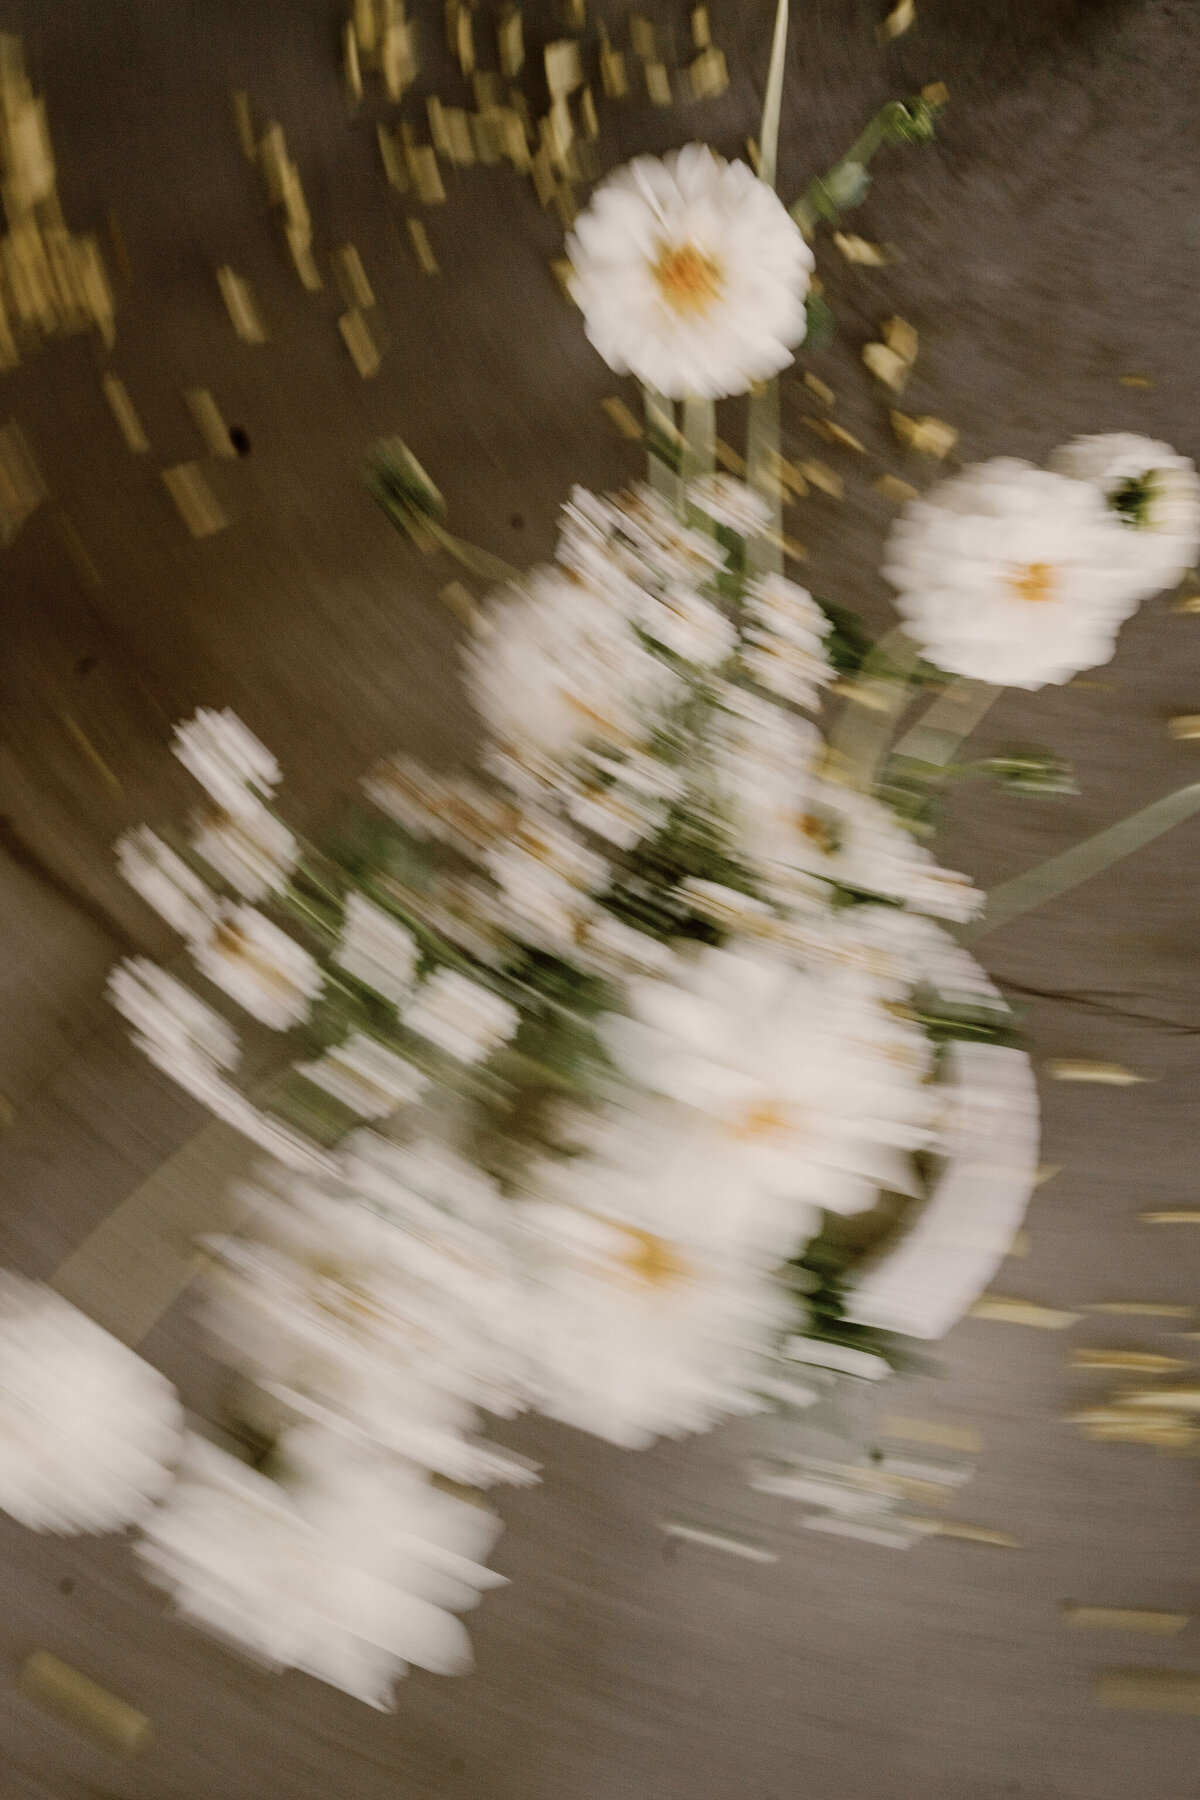 The Lovers Elopement Co - wedding photography - floral arrangements